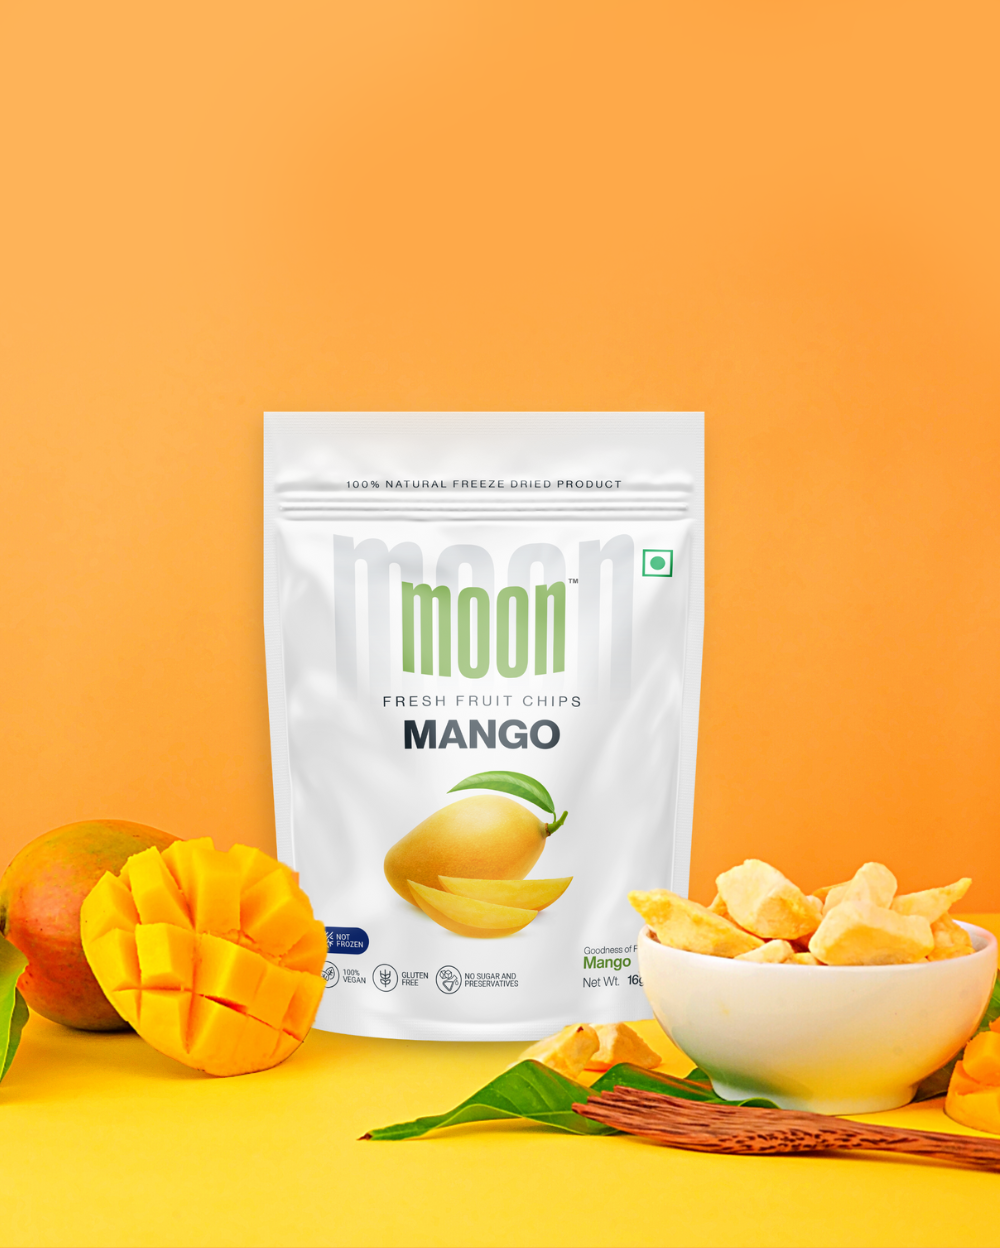 A bag of Moon Freeze Dried Banana + Mango Cubs next to a bowl of mango chips.